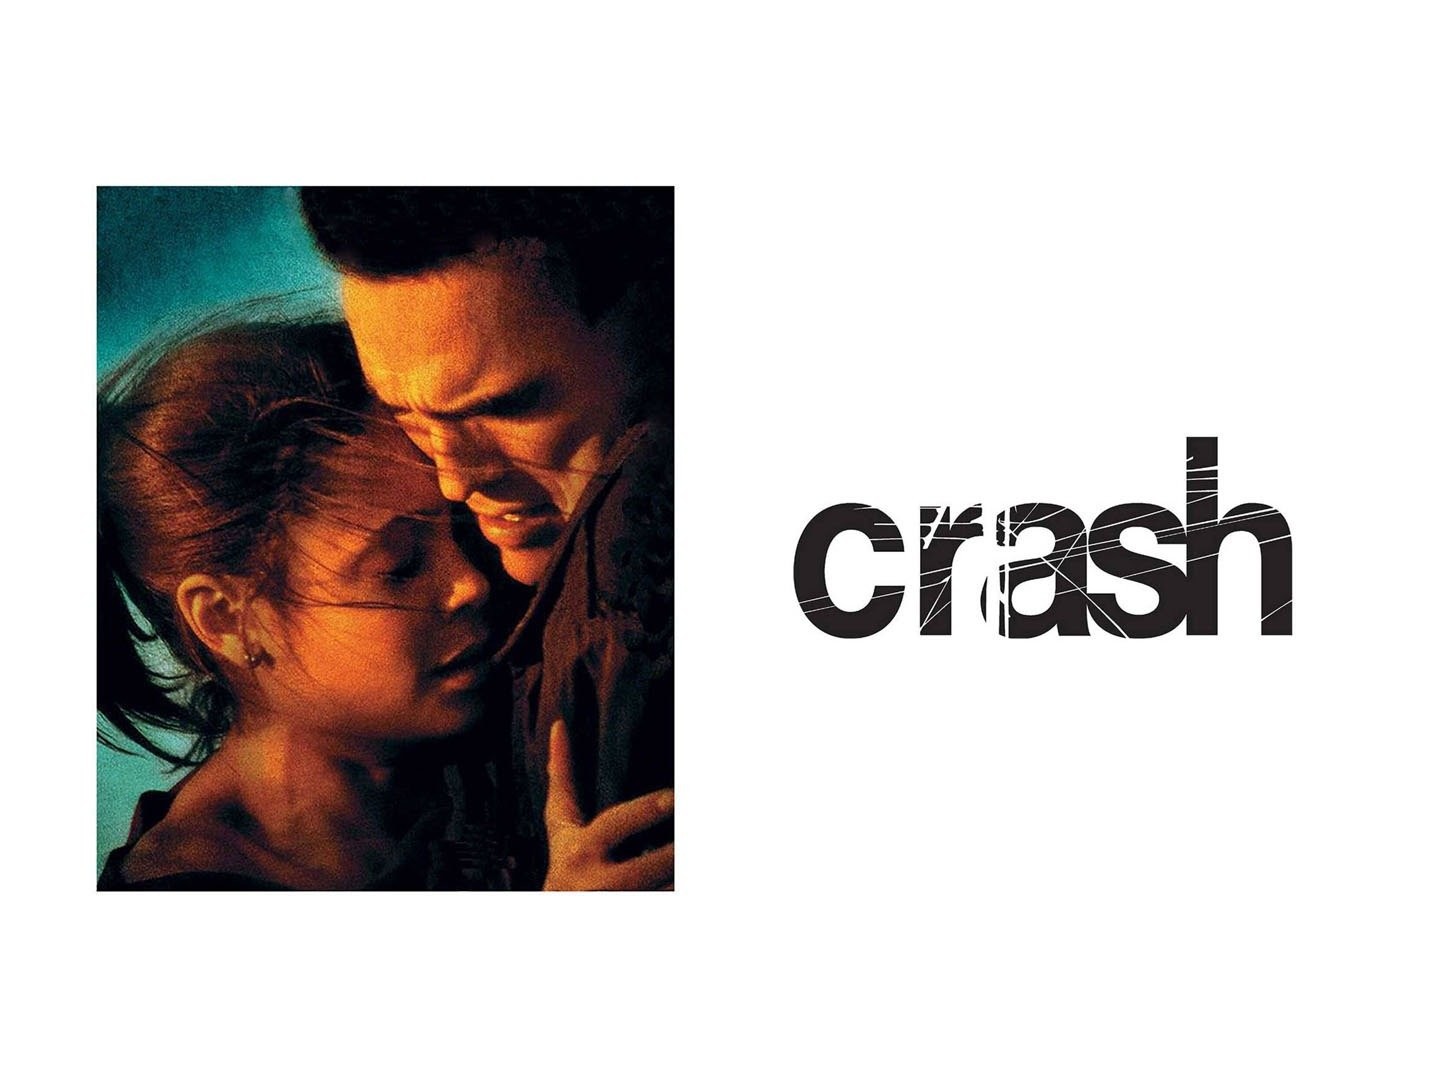 Crash - Rotten Tomatoes